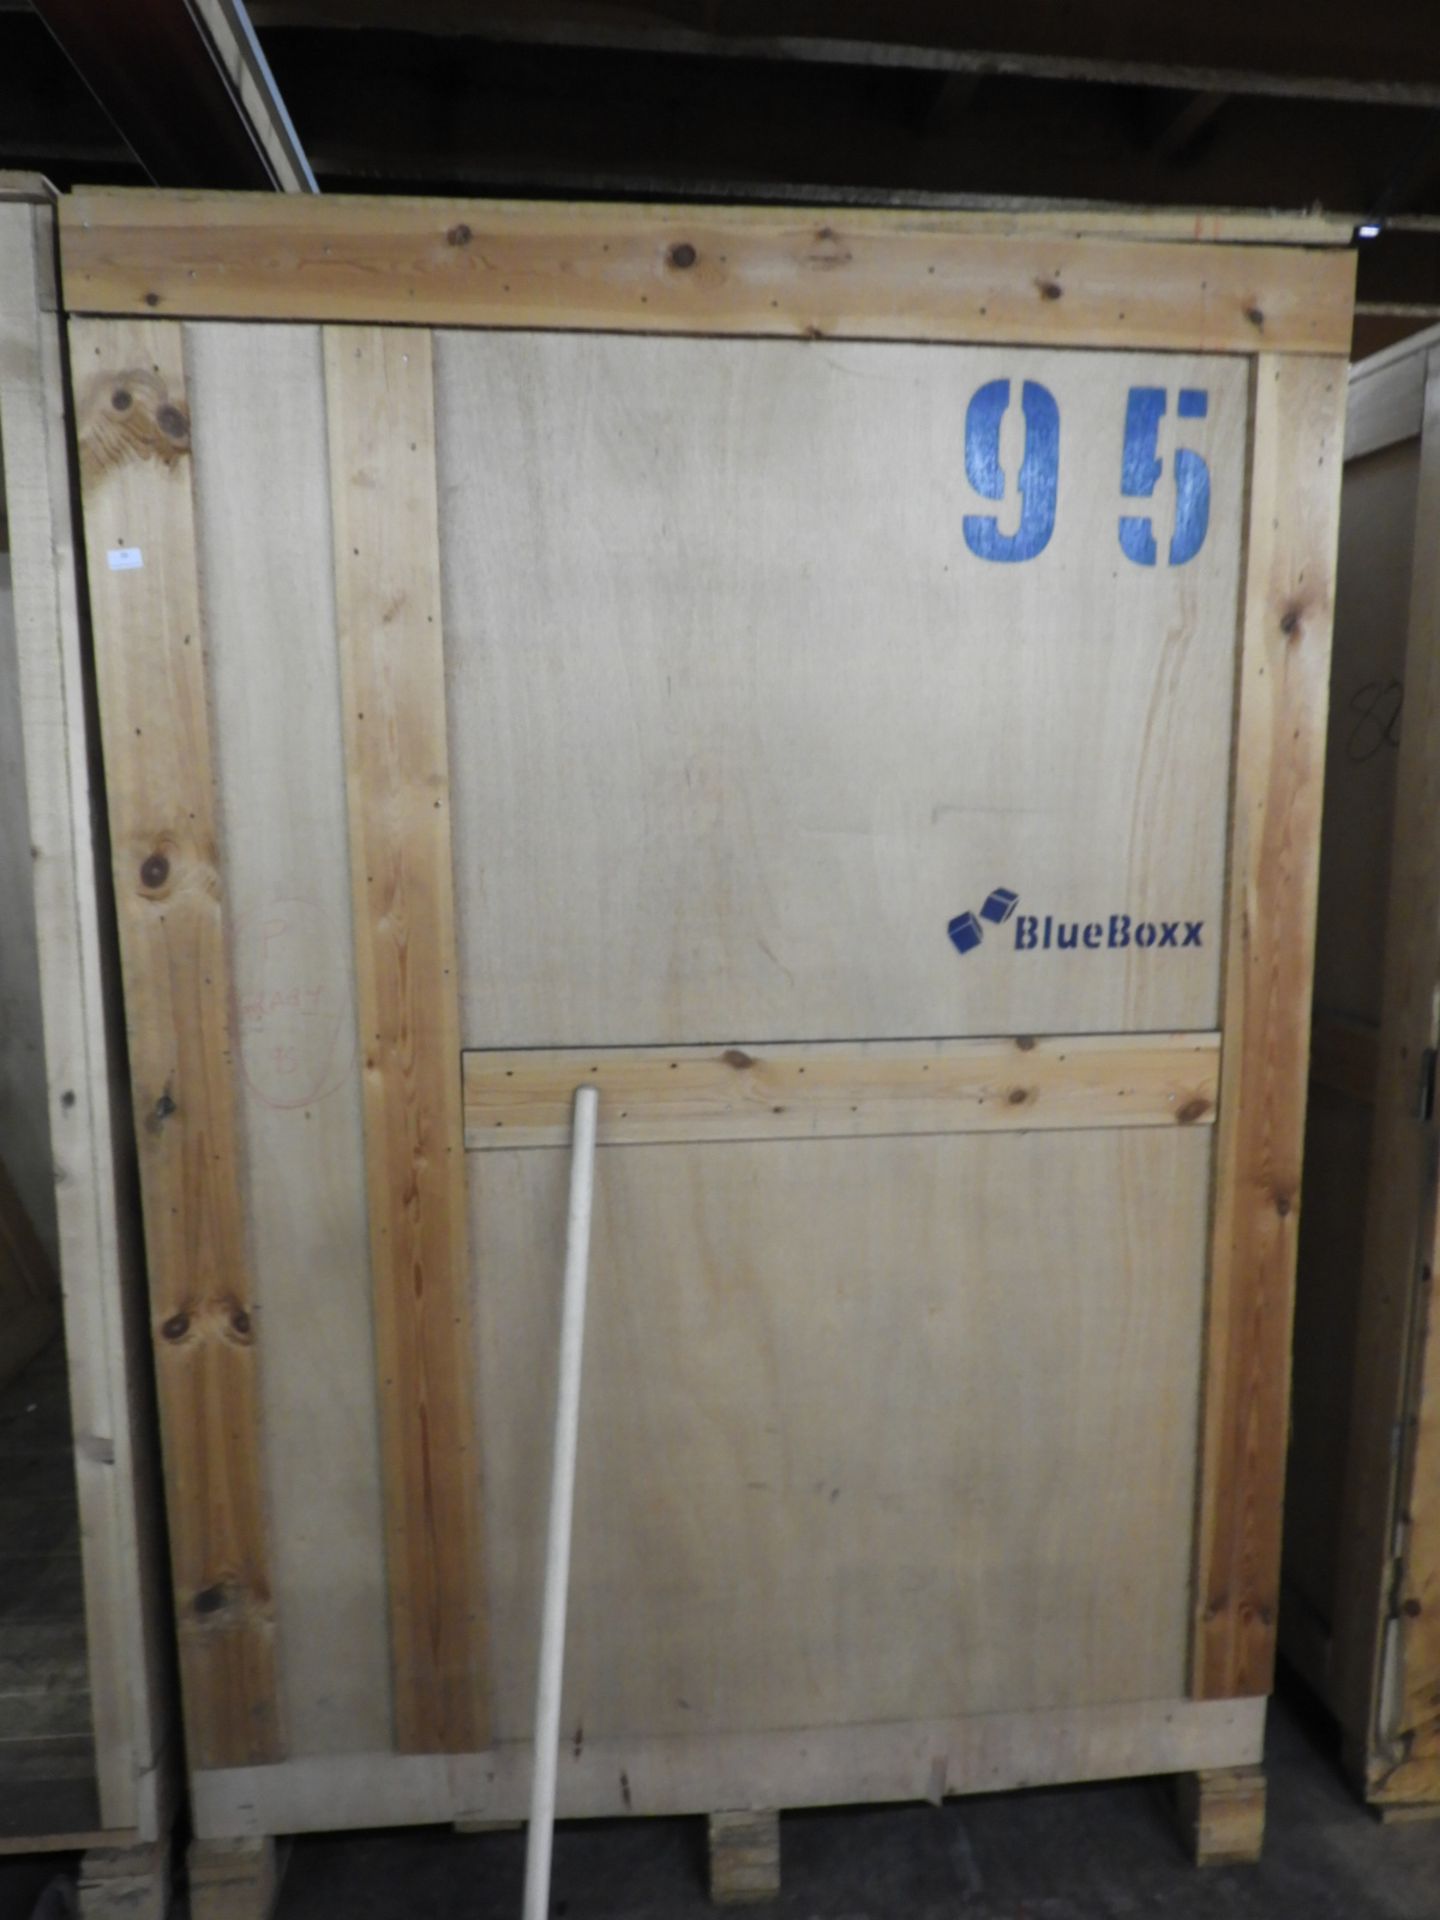 Furniture Removals Company Storage Crate 150cm wide x 210cm deep x 225cm high